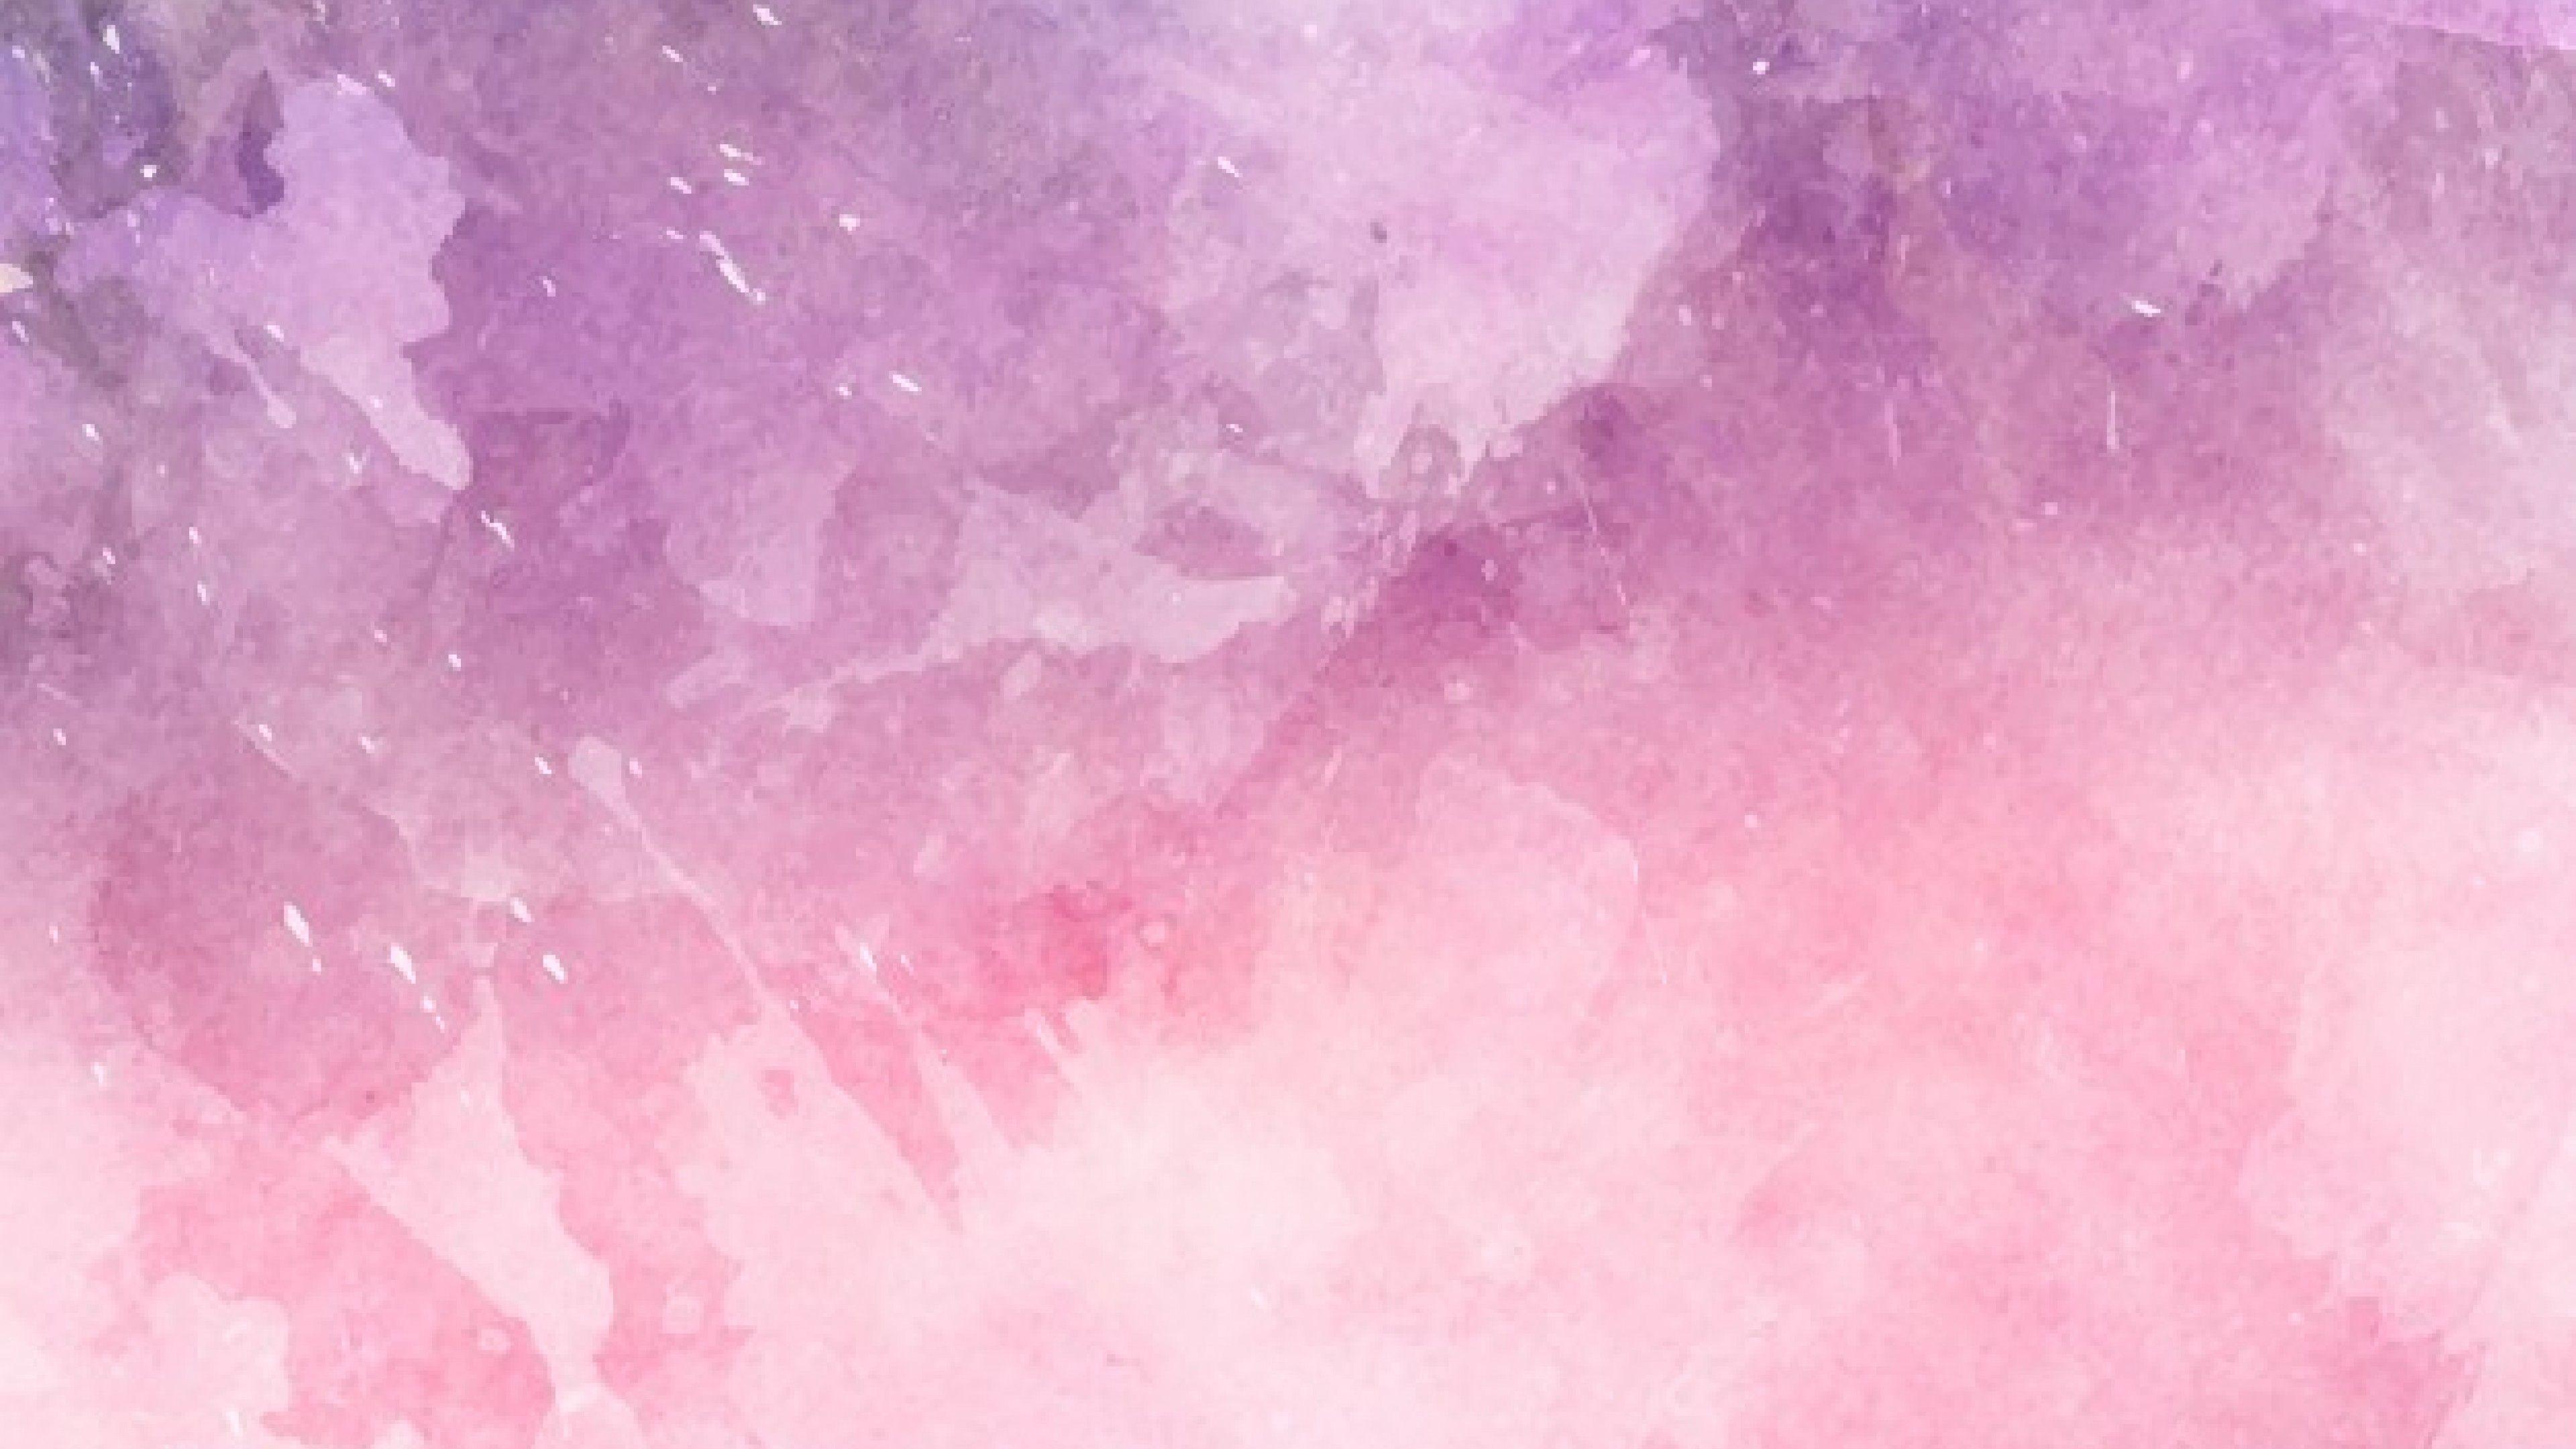 Pink Aesthetic Wallpaper Desktop 4K - Insight from Leticia